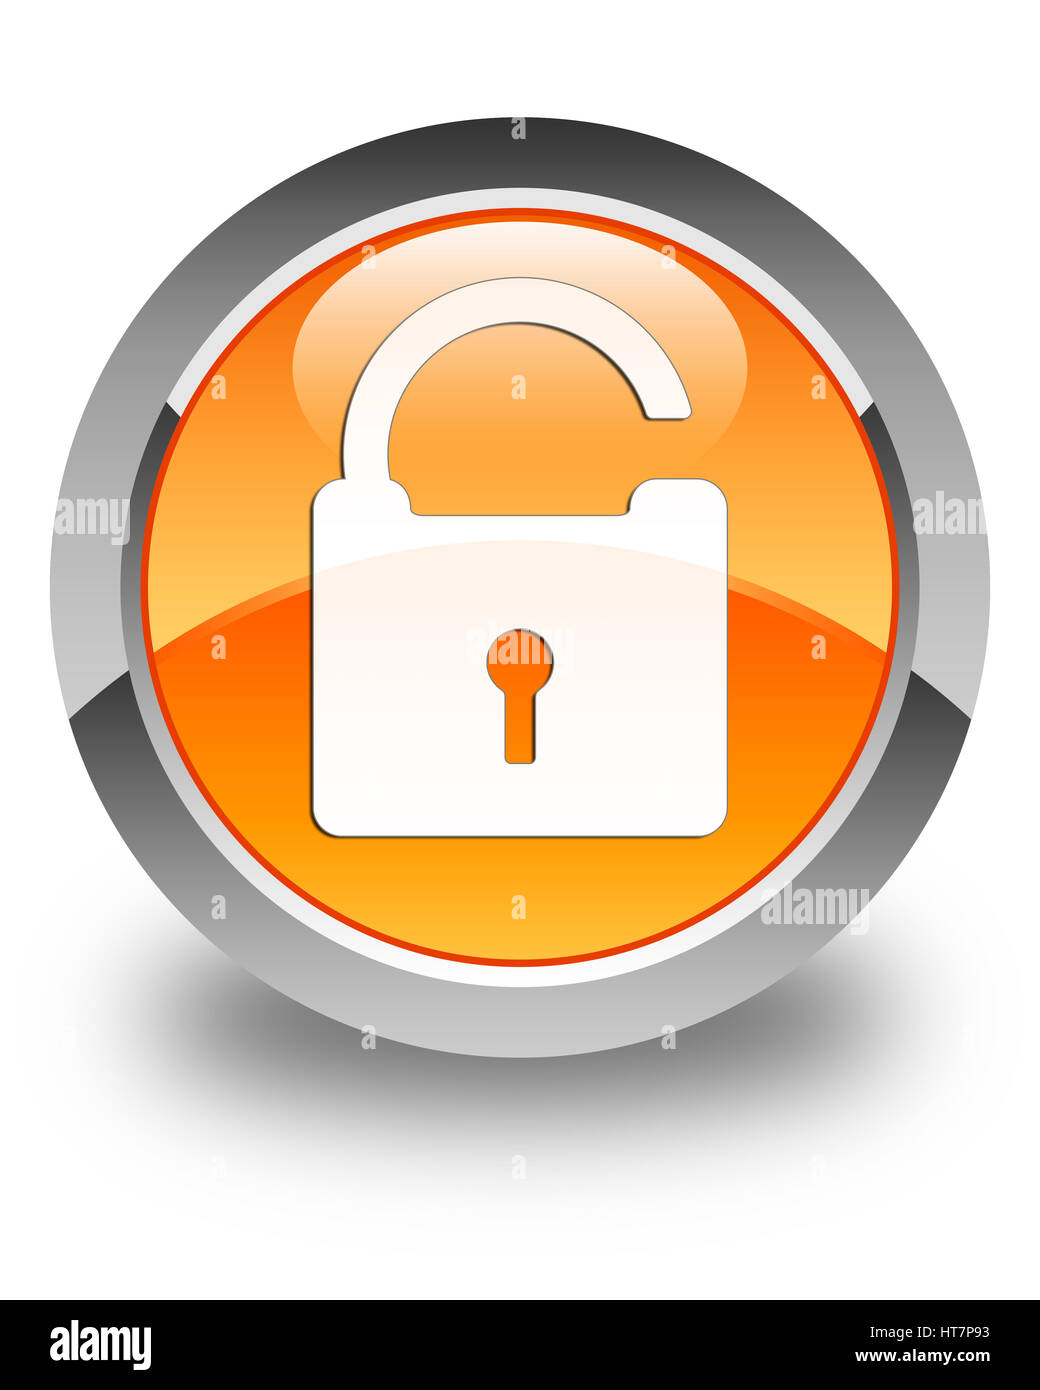 Unlock icon isolated on glossy orange round button abstract illustration Stock Photo